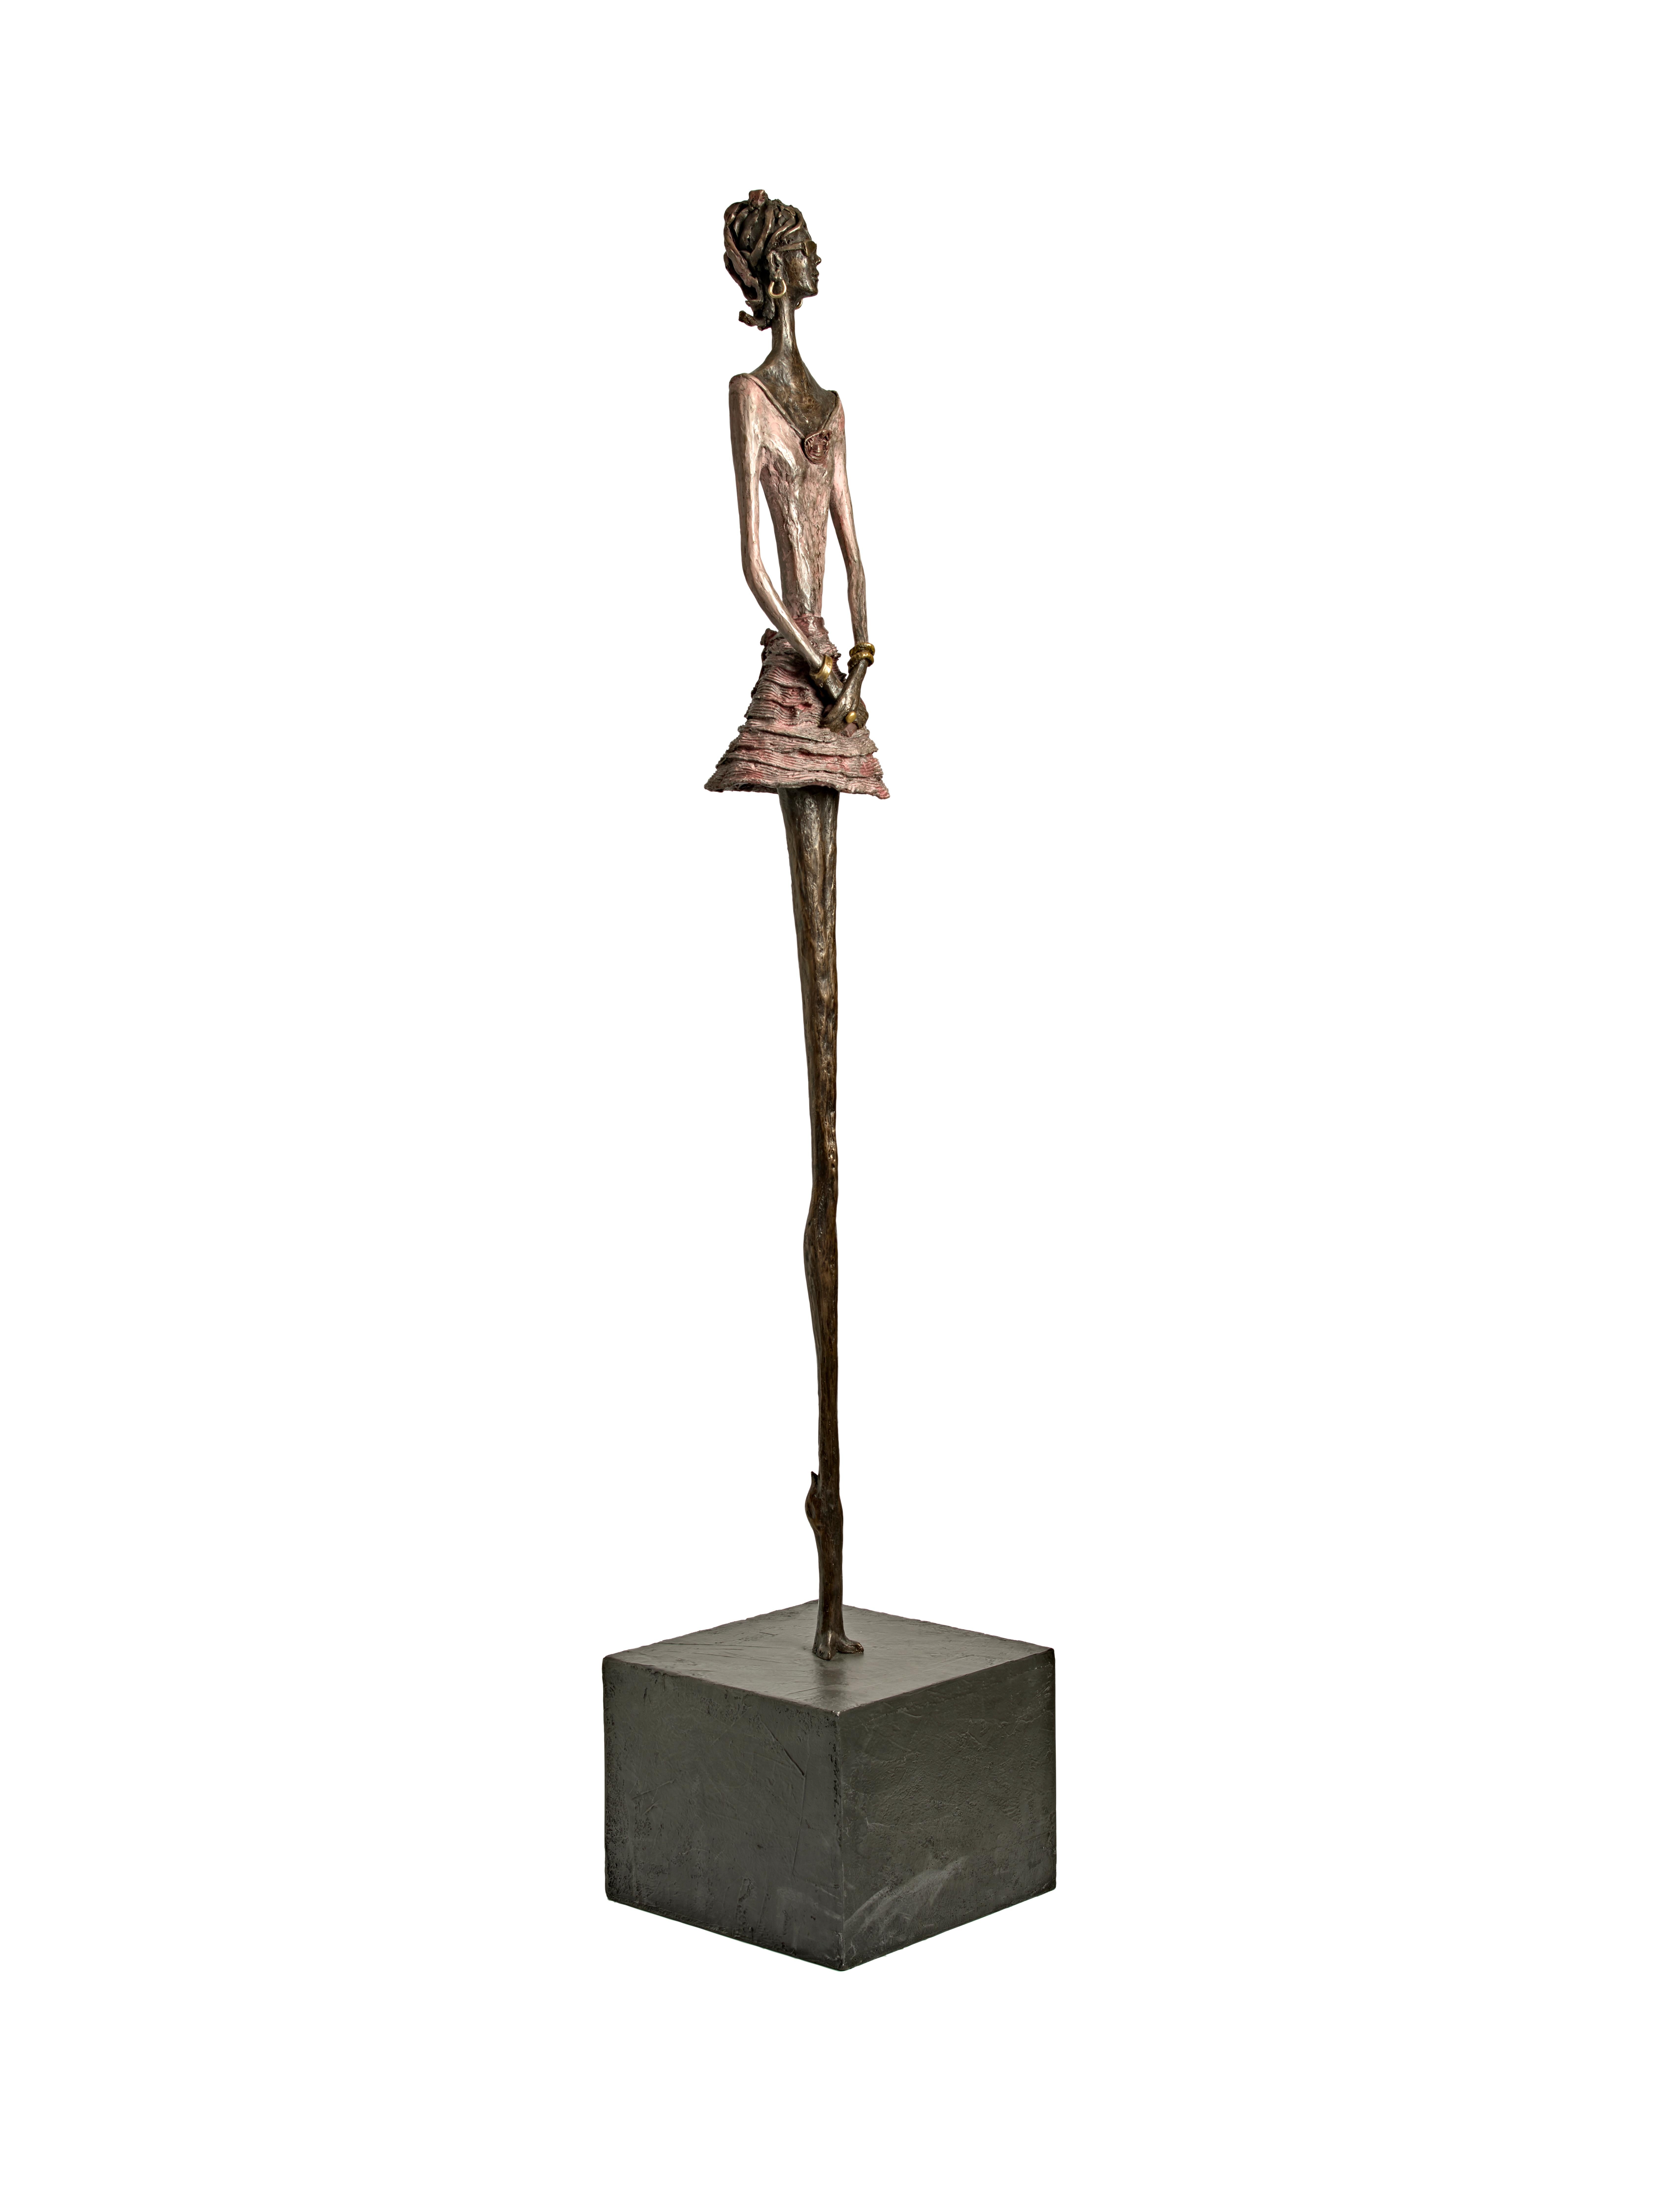 Daiquiri (résine de bronze) - sculpture contemporaine de mode féminine haute  - Contemporain Sculpture par Sara Ingleby-Mackenzie